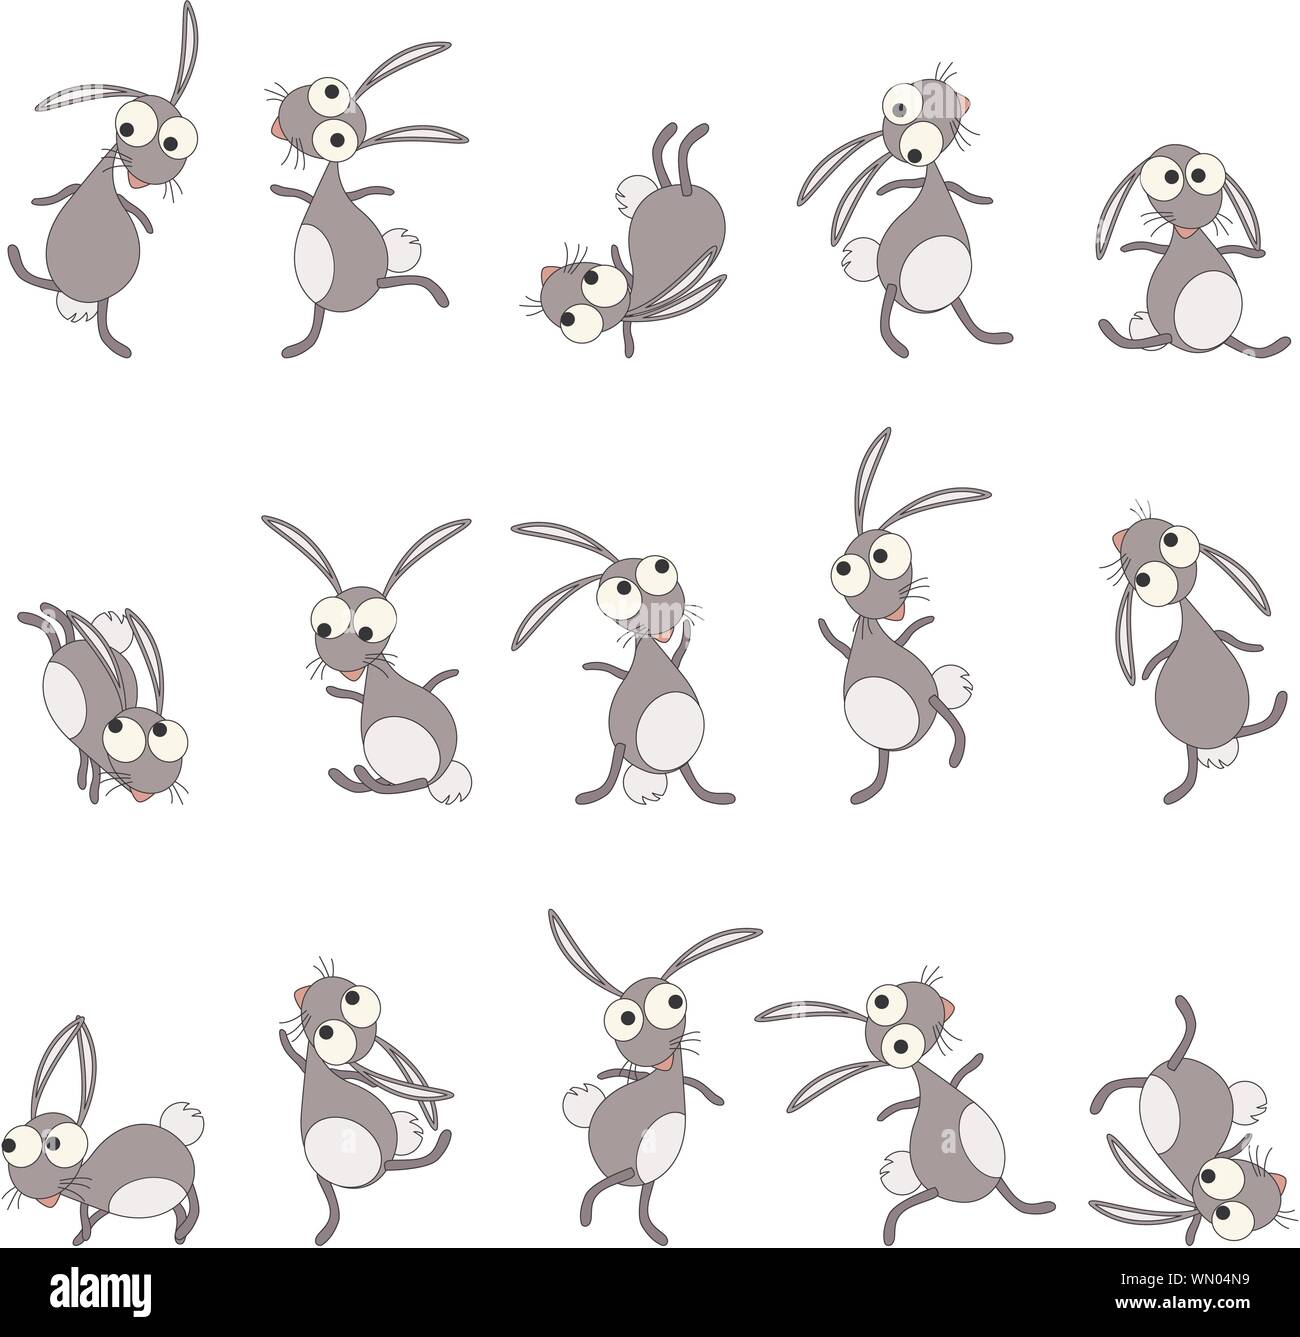 Dancing rabbits cartoon Stock Vector